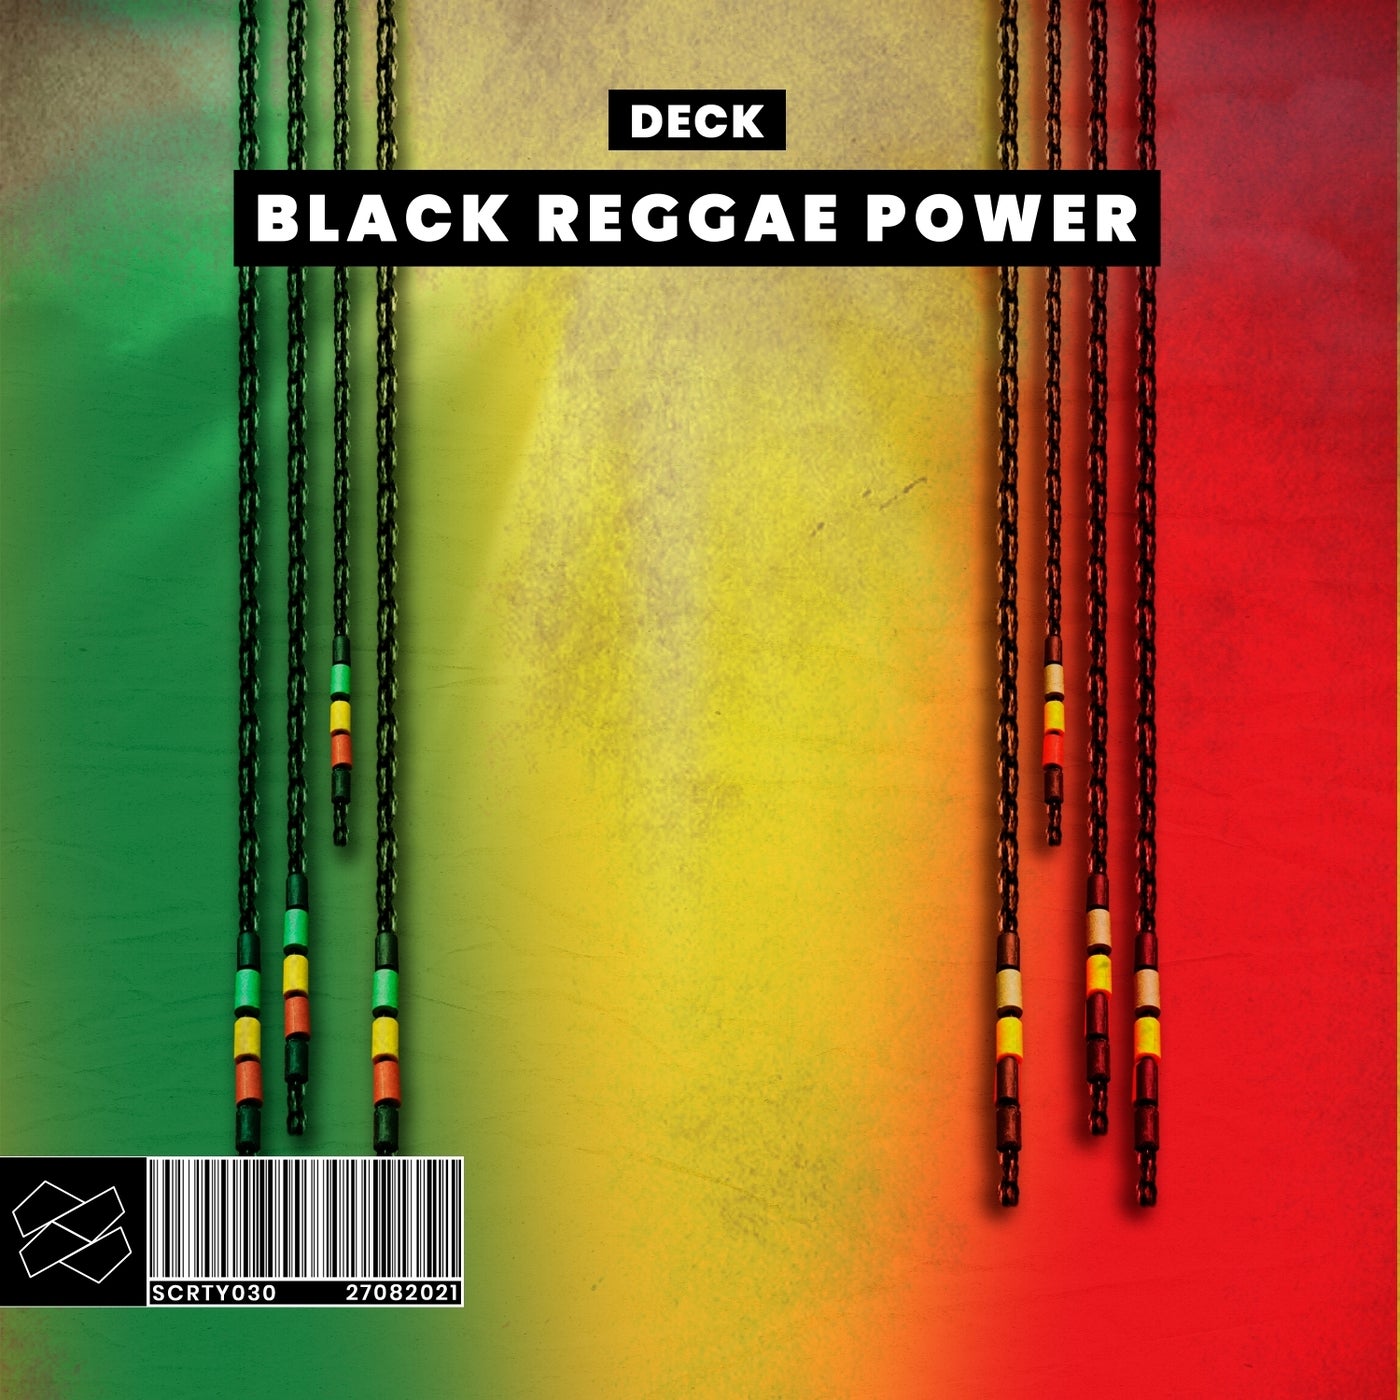 Black Reggae Power